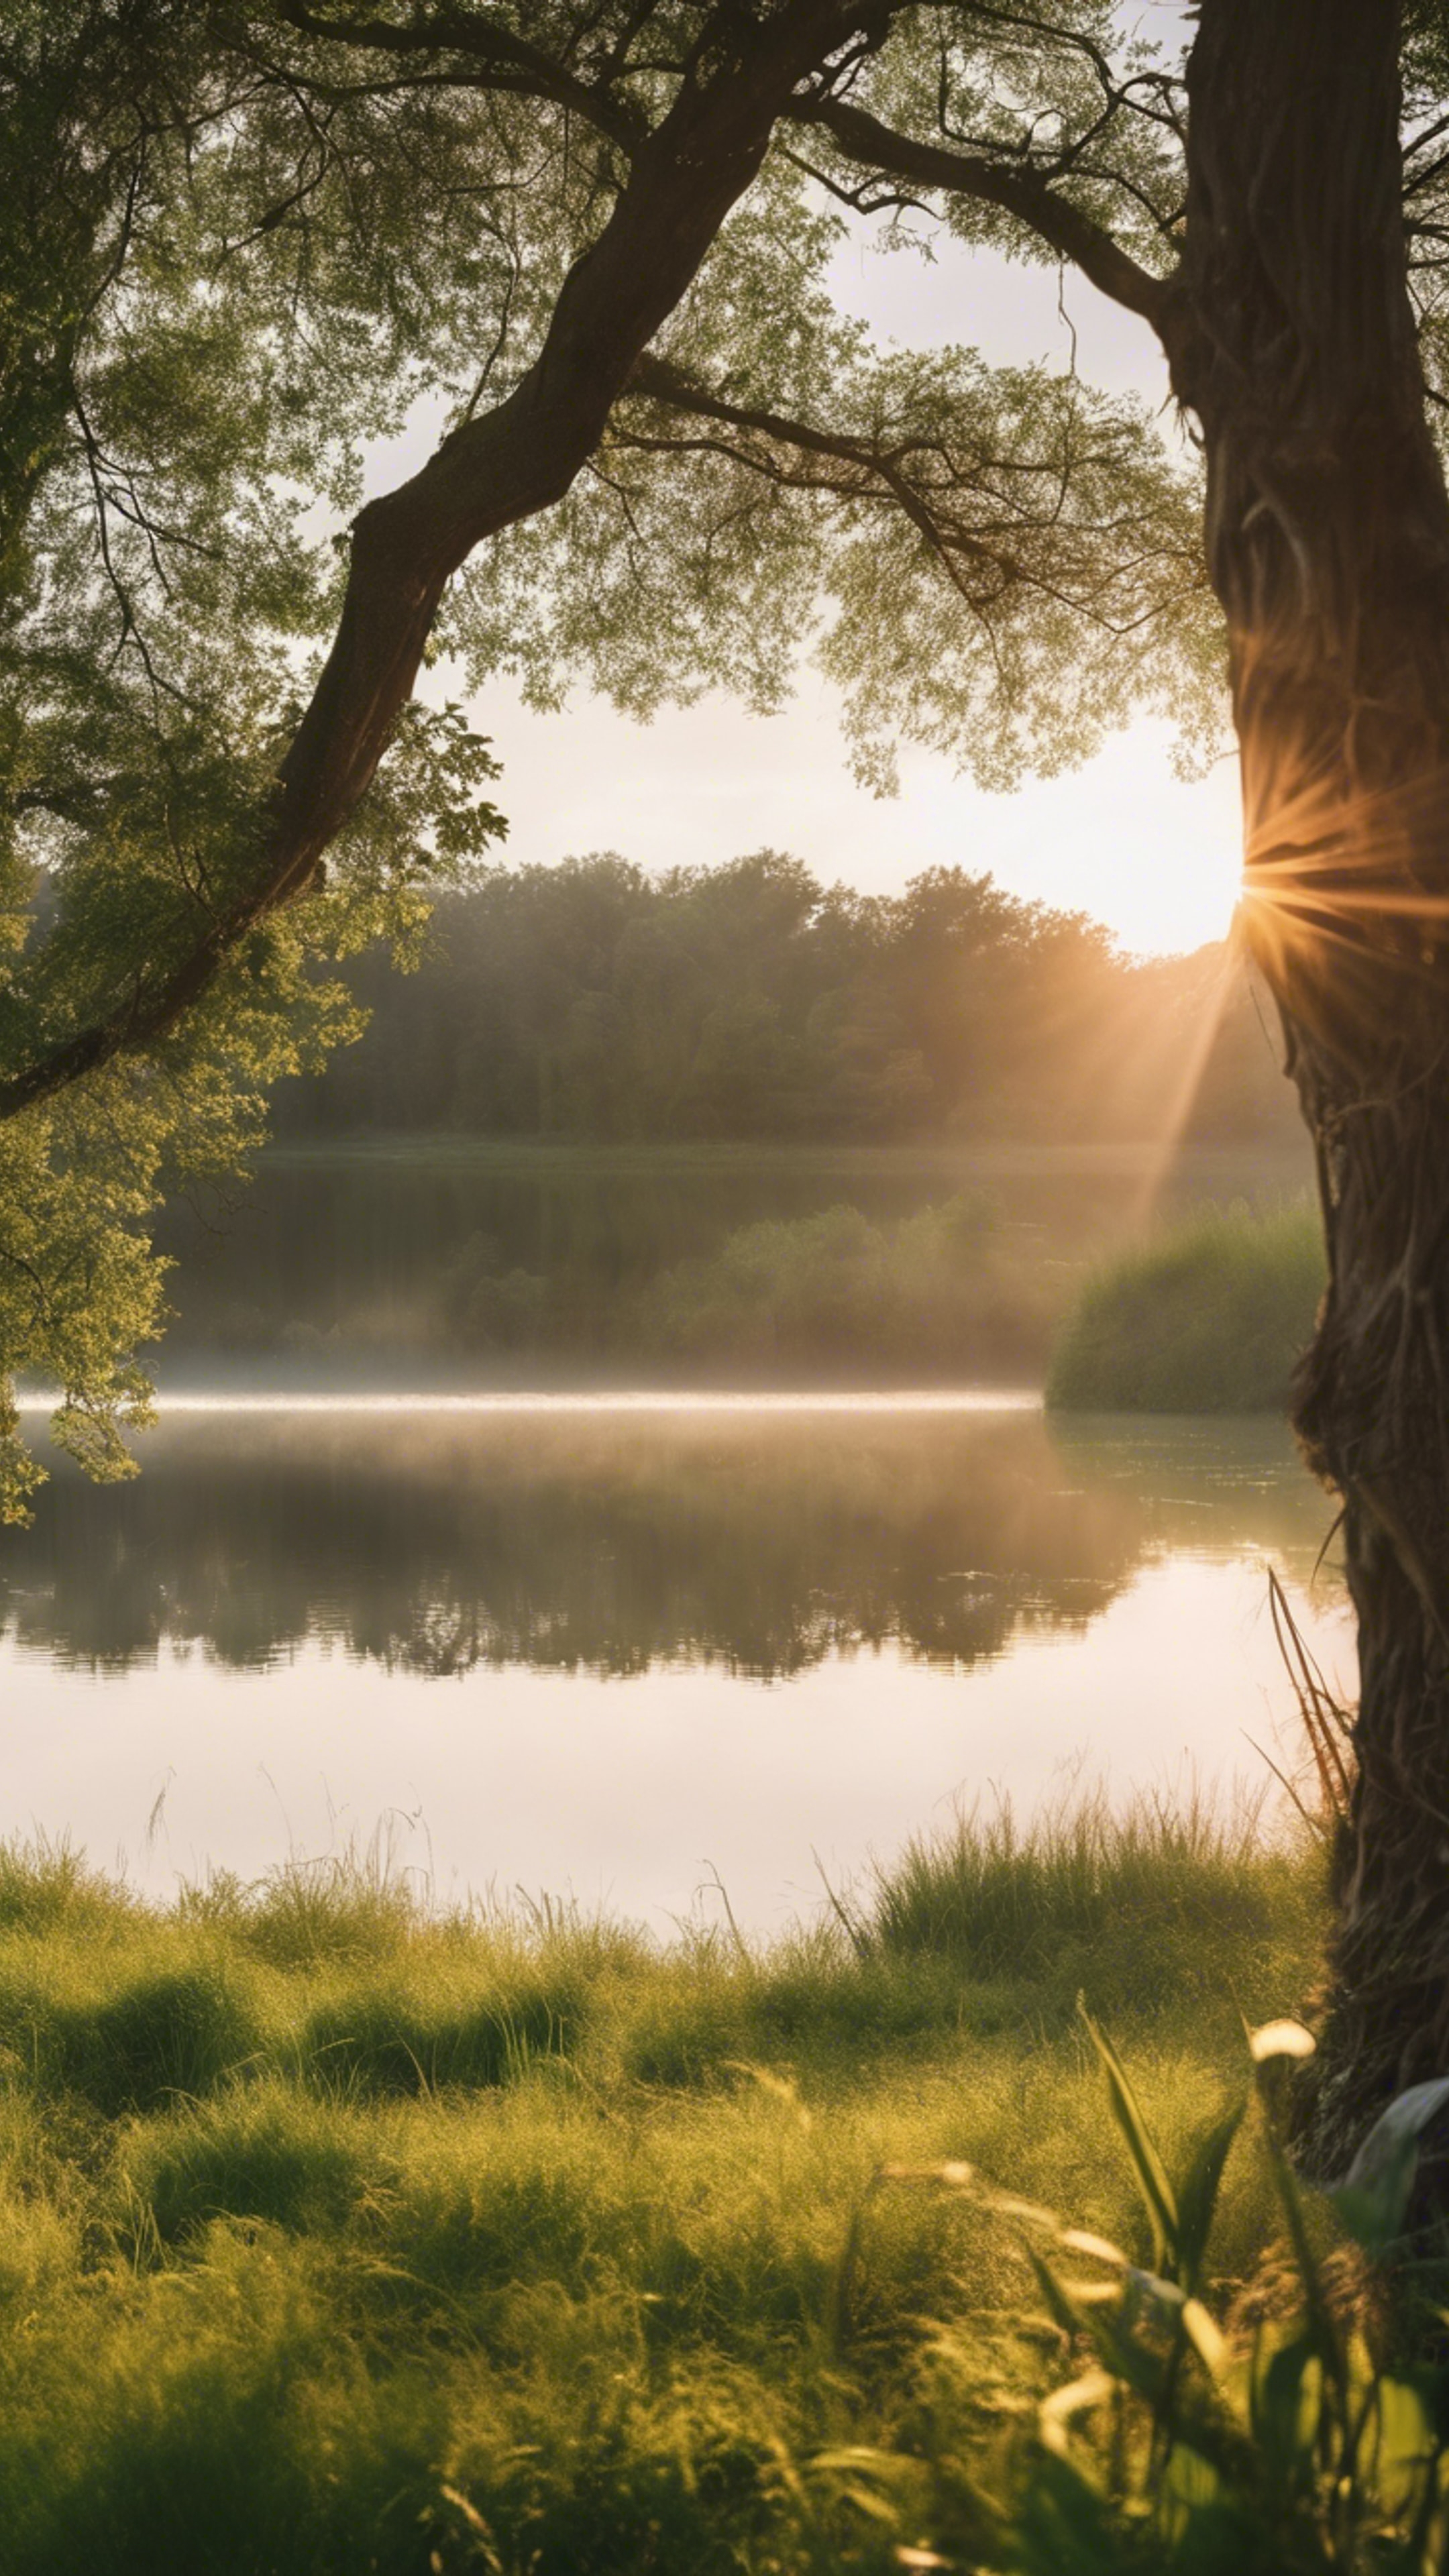 A beautiful sunrise reflecting off a serene lake, enveloped by lush green meadows. ورق الجدران[3fcd1b5f237347a583b1]